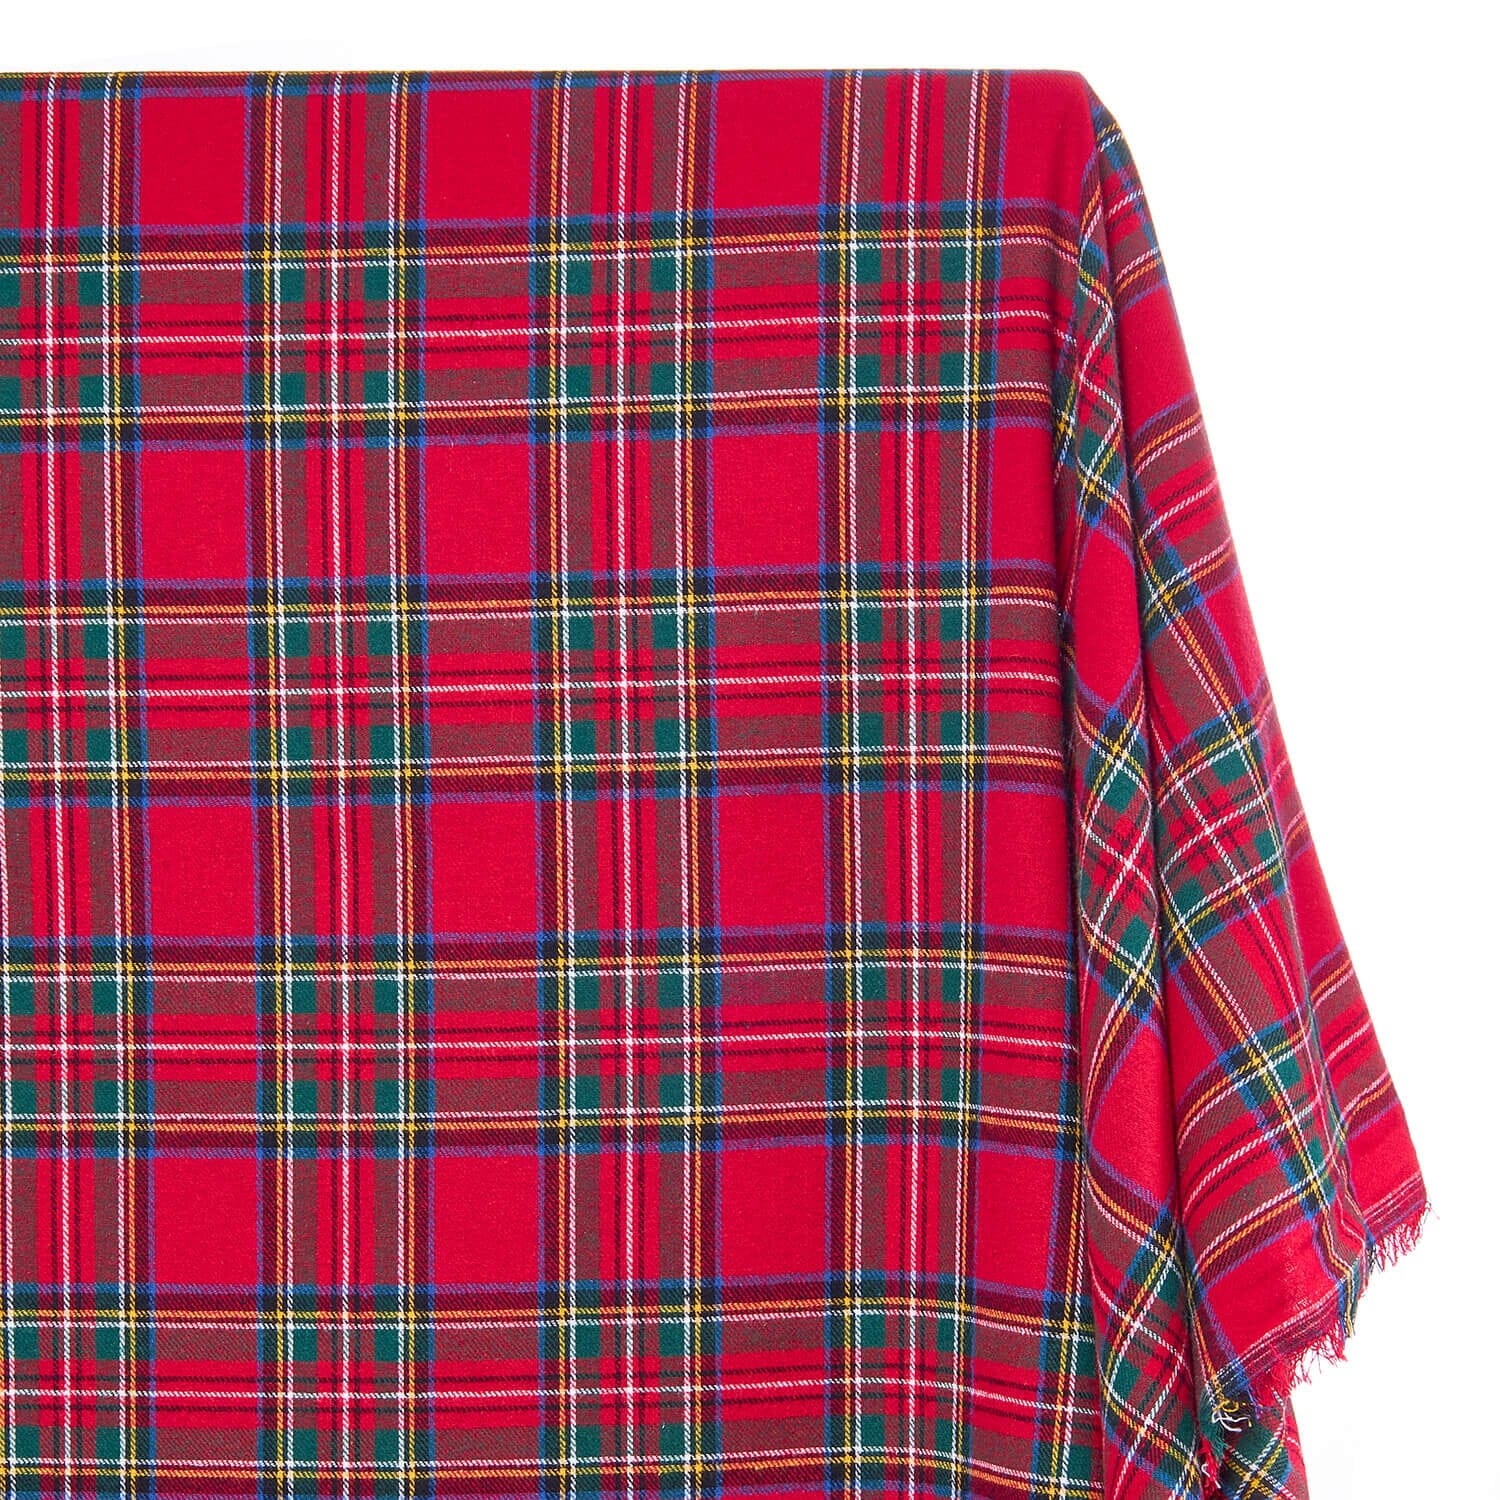 Red Royal Stewart Tartan Fabric Matching Thread. Tartan Fabric by